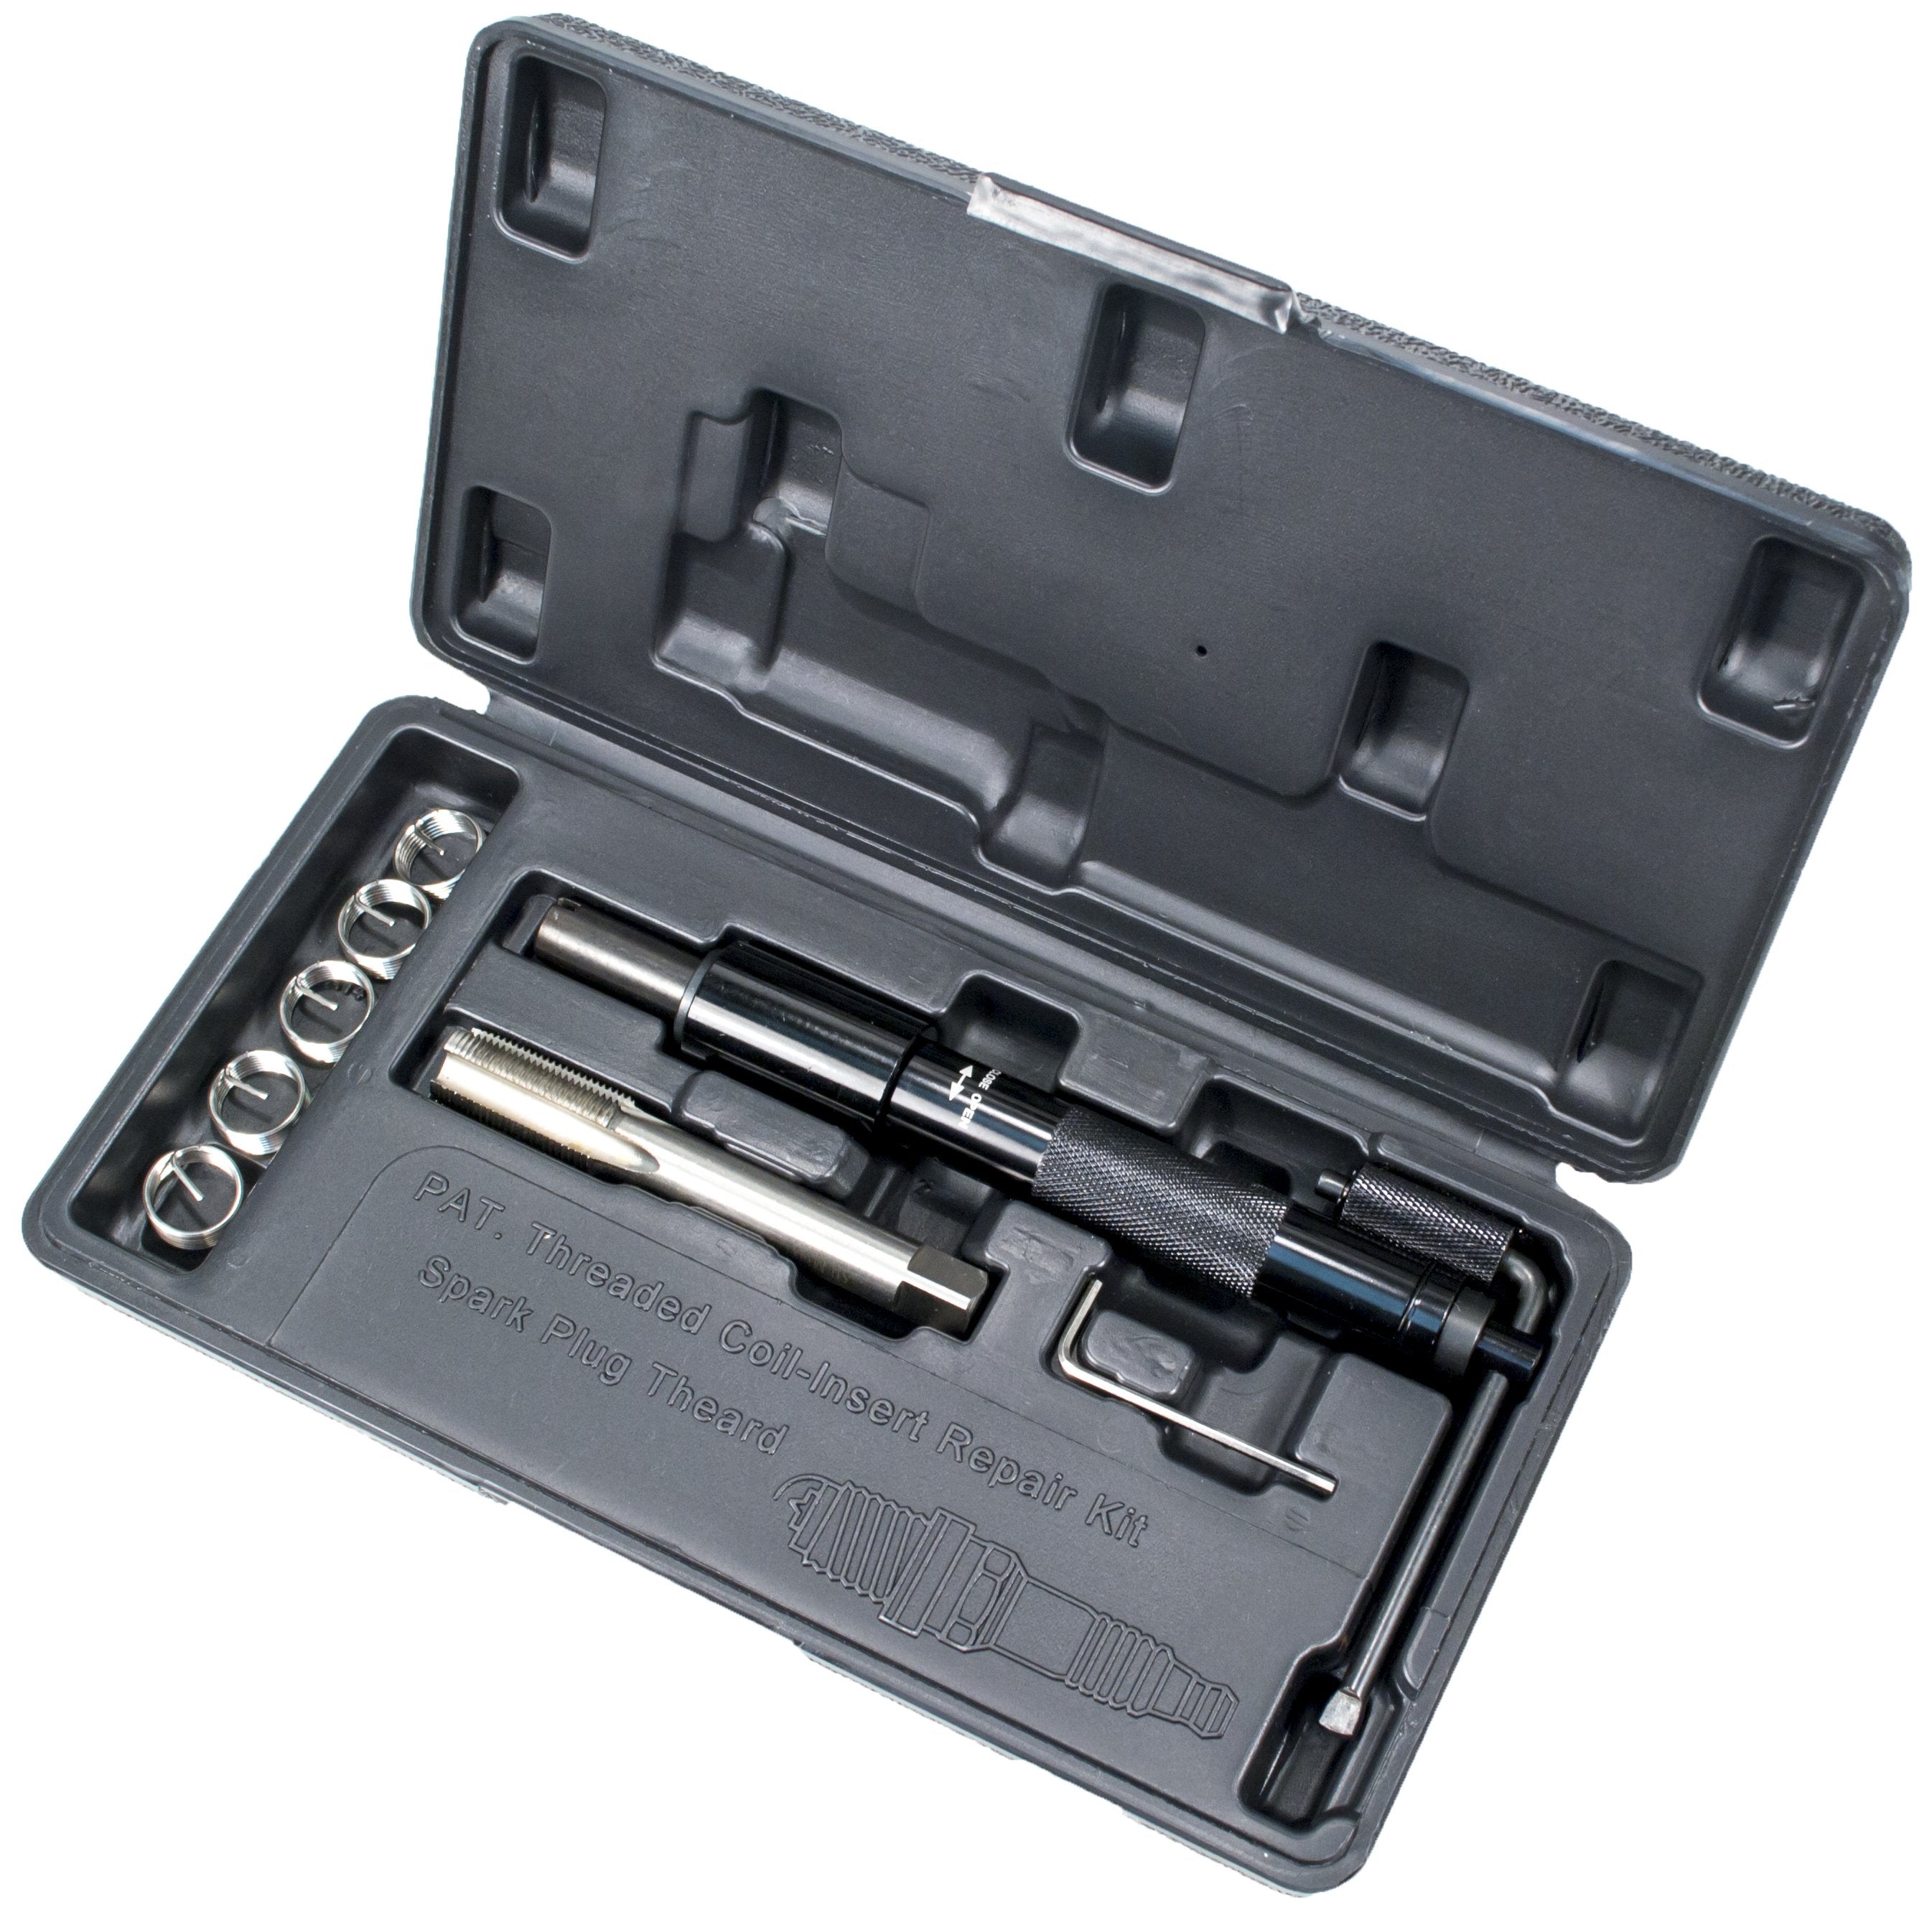 Professional Spark Plug Threaded Coil Insert Repair Tool Kit M12 x 1.5 - Tool Guy Republic